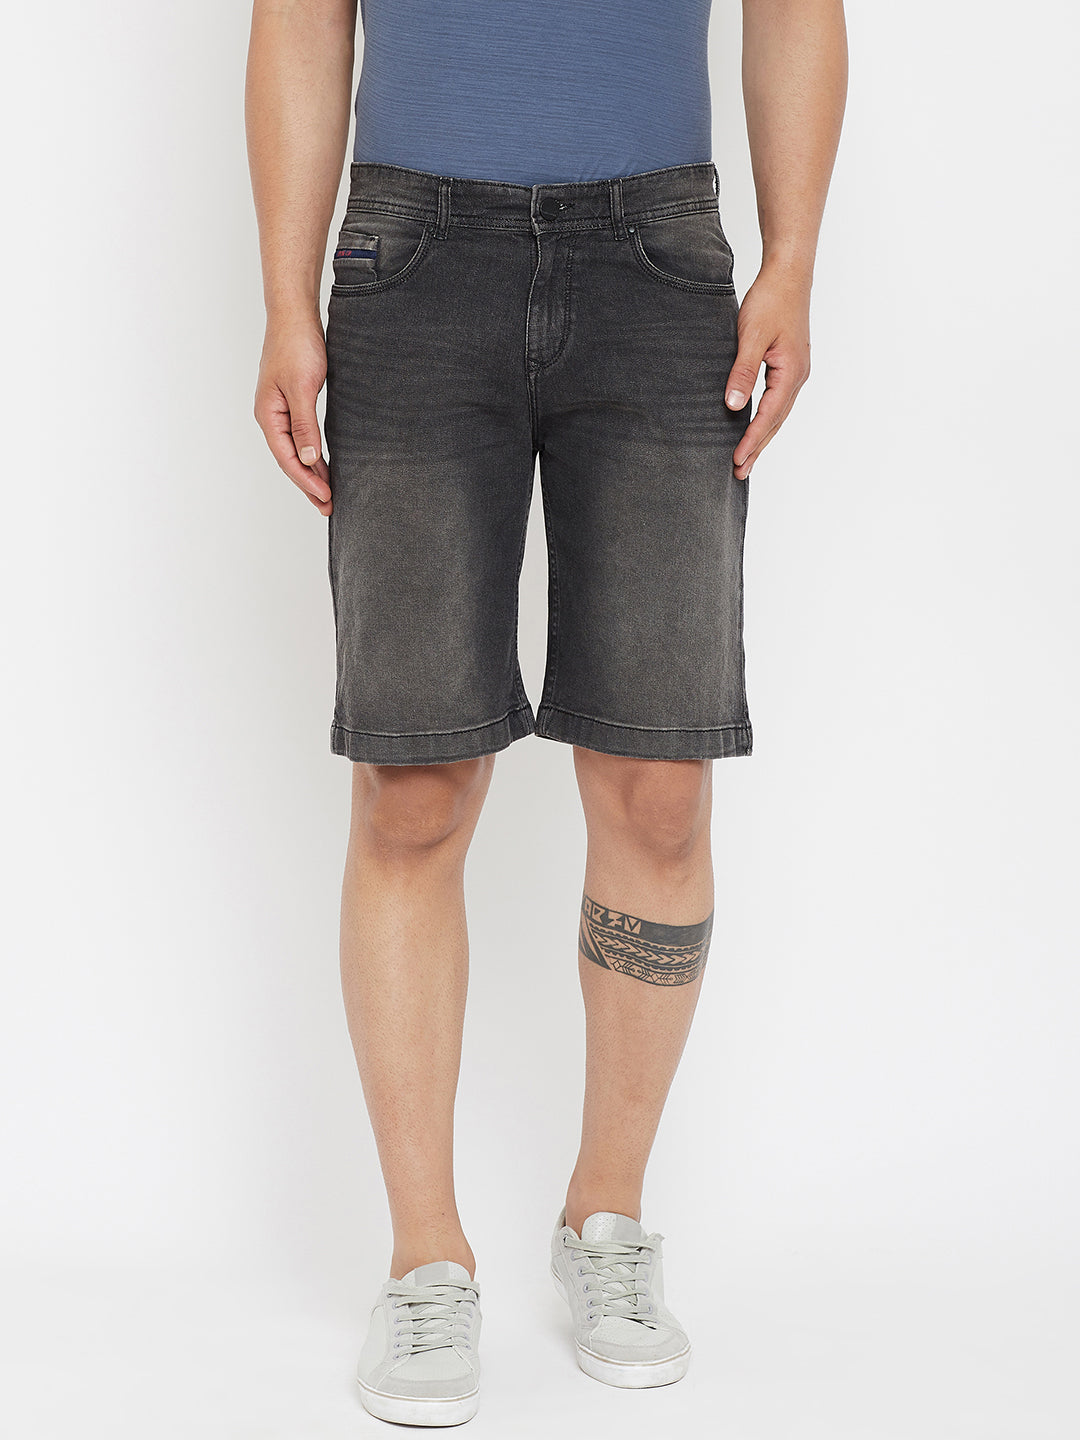 Grey Shorts - Men Shorts